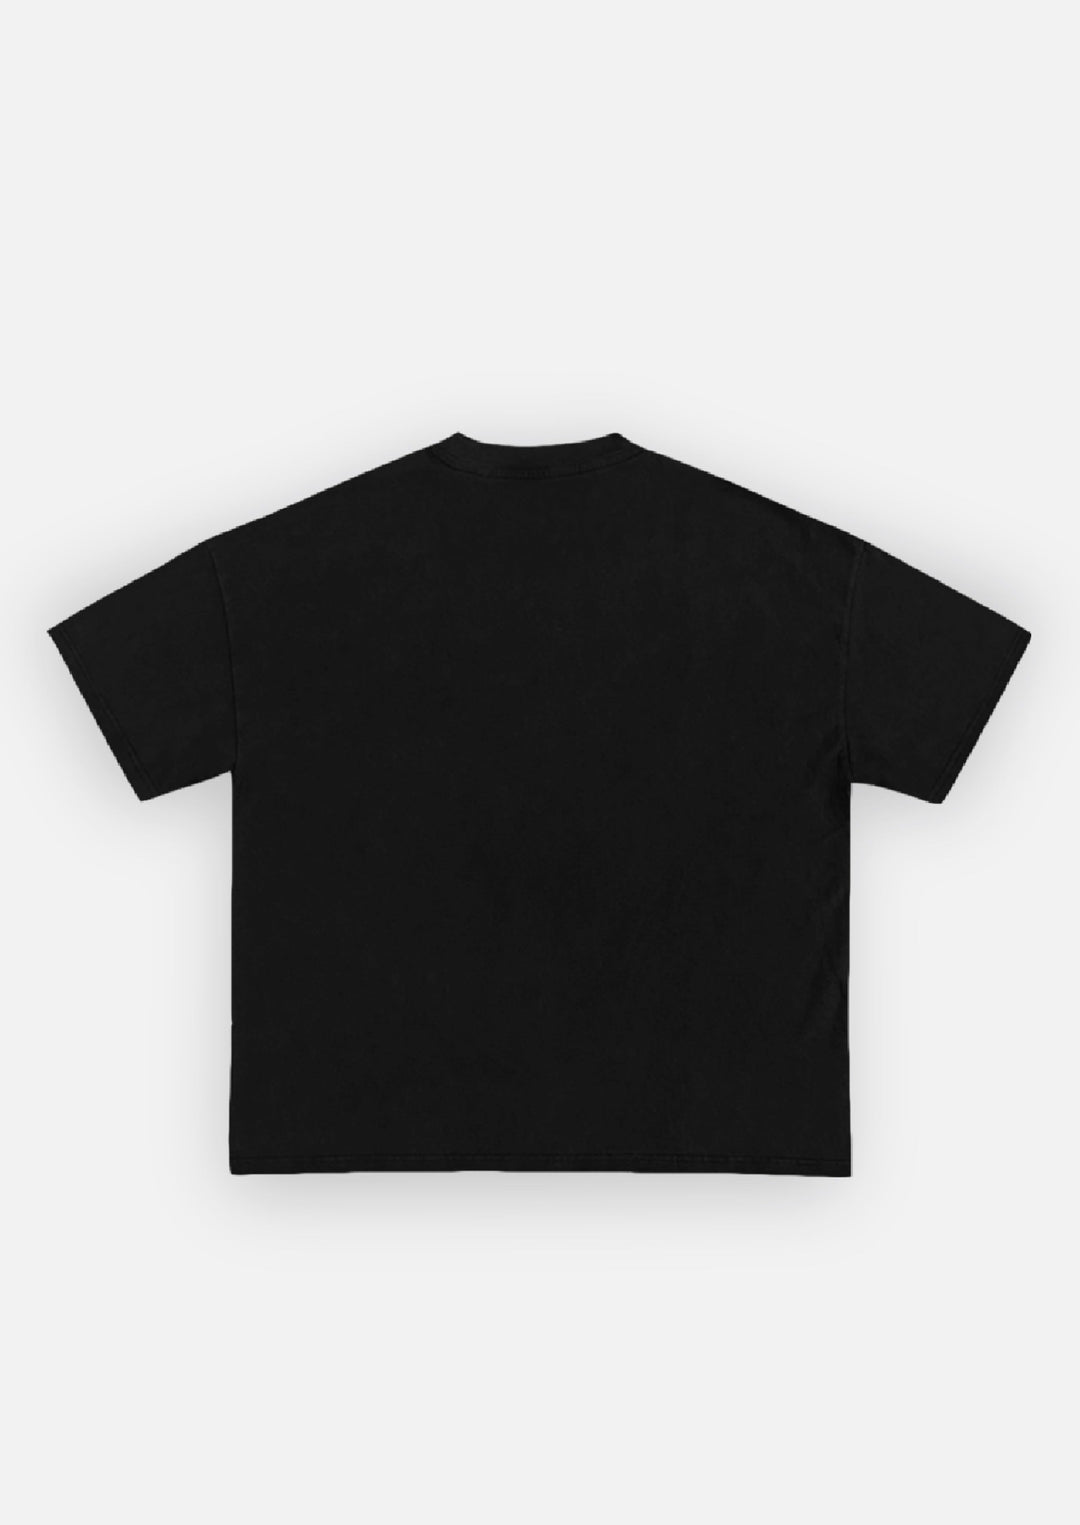 Diamond Cross Ranch Rowdy Black T-Shirt 